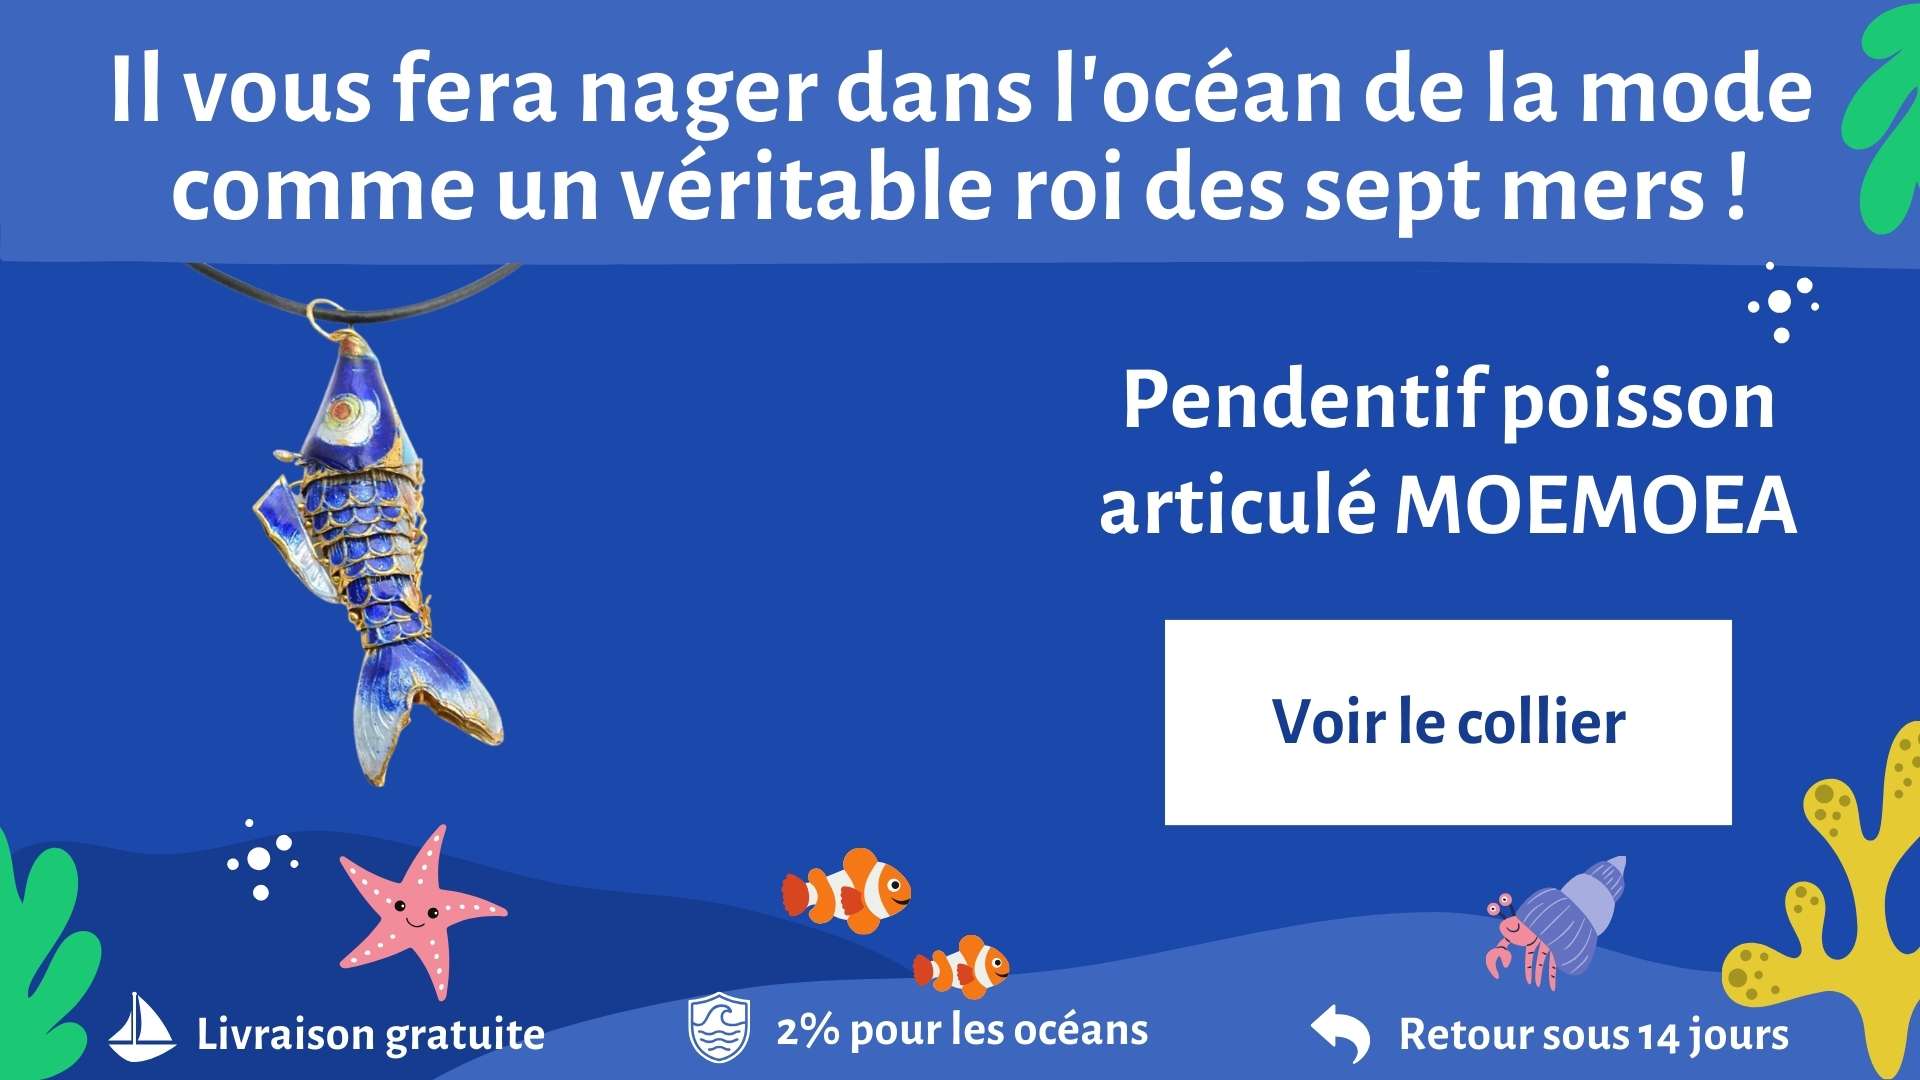 https://mer-aux-tresors.com/products/pendentif-poisson-articule